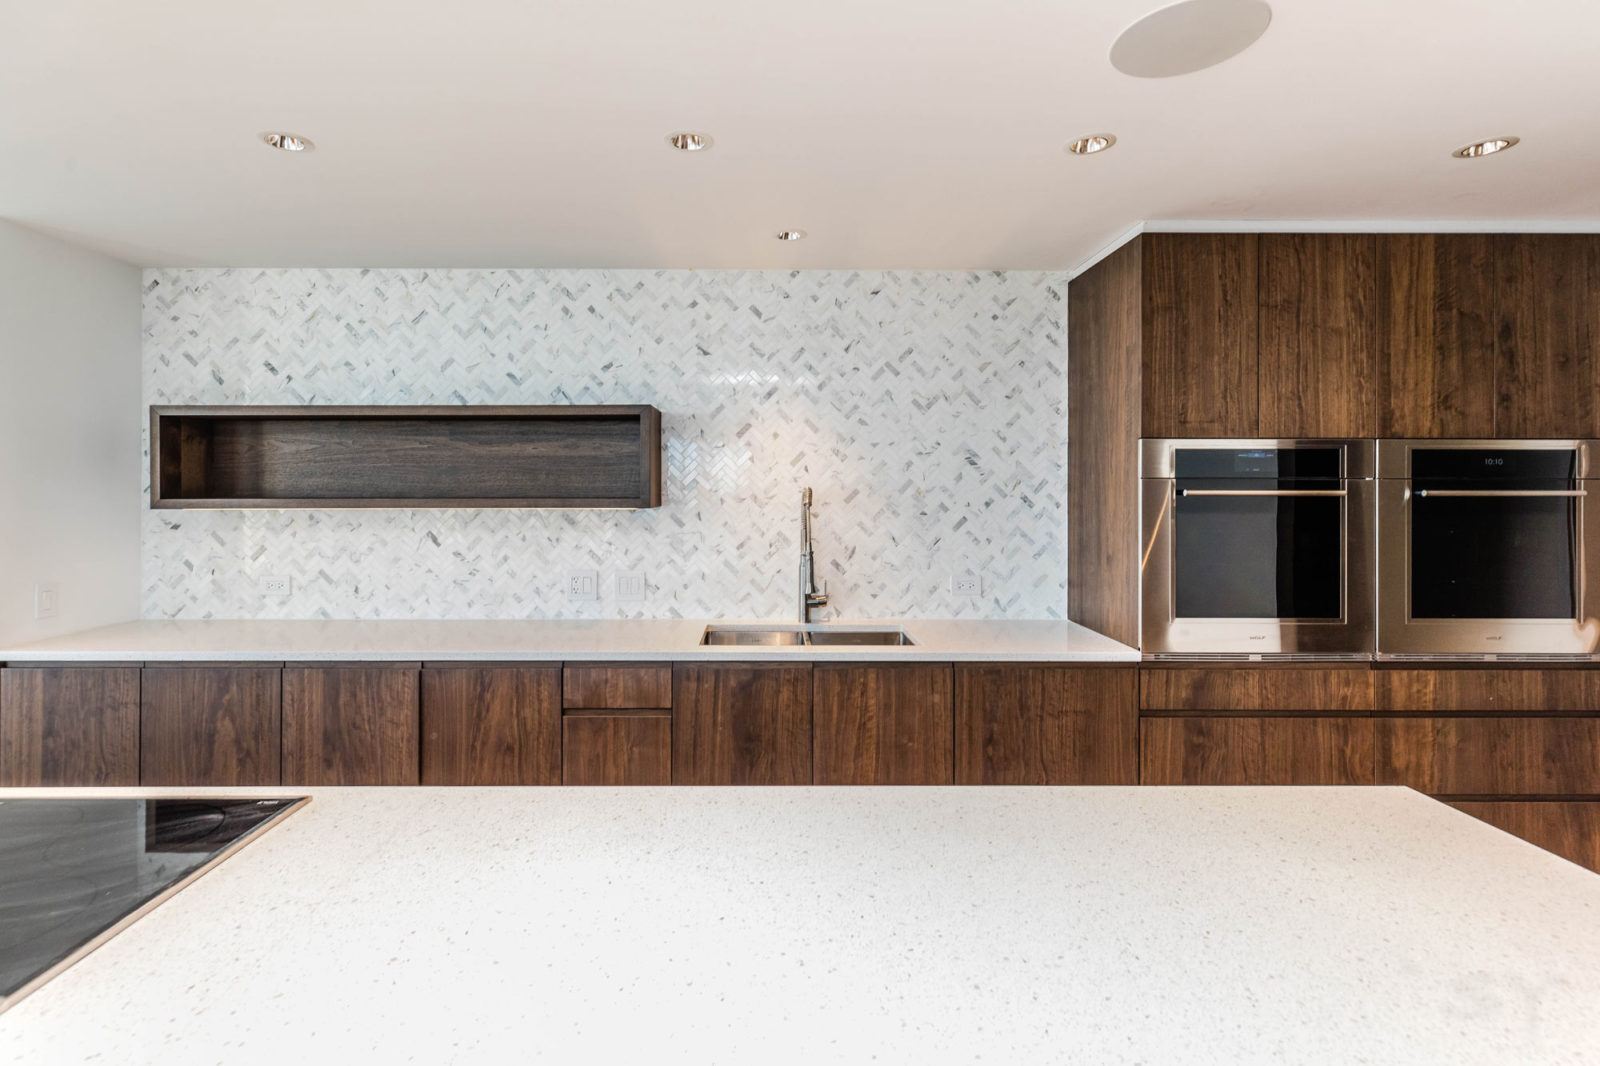 kitchen renovation geometric backsplash large countertop & island double oven